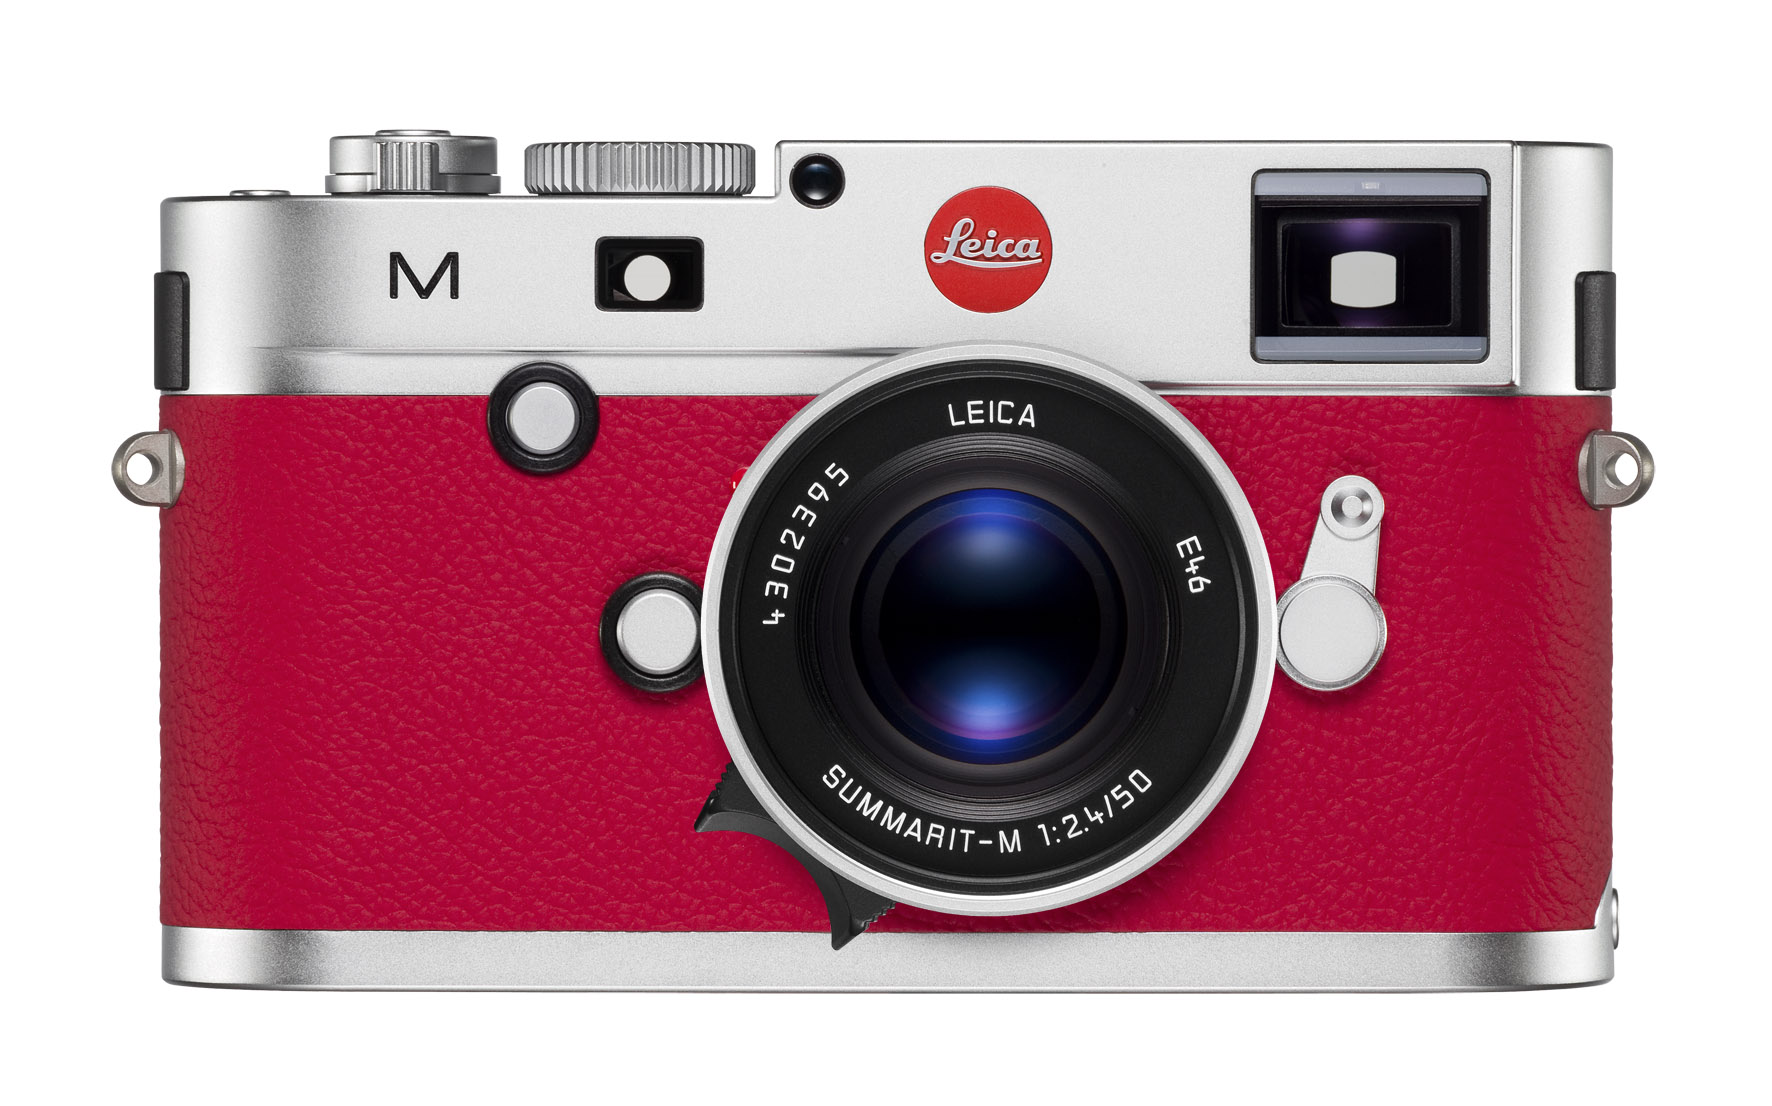 New Leica M Typ 240 à la carte program announced | Leica News & Rumors